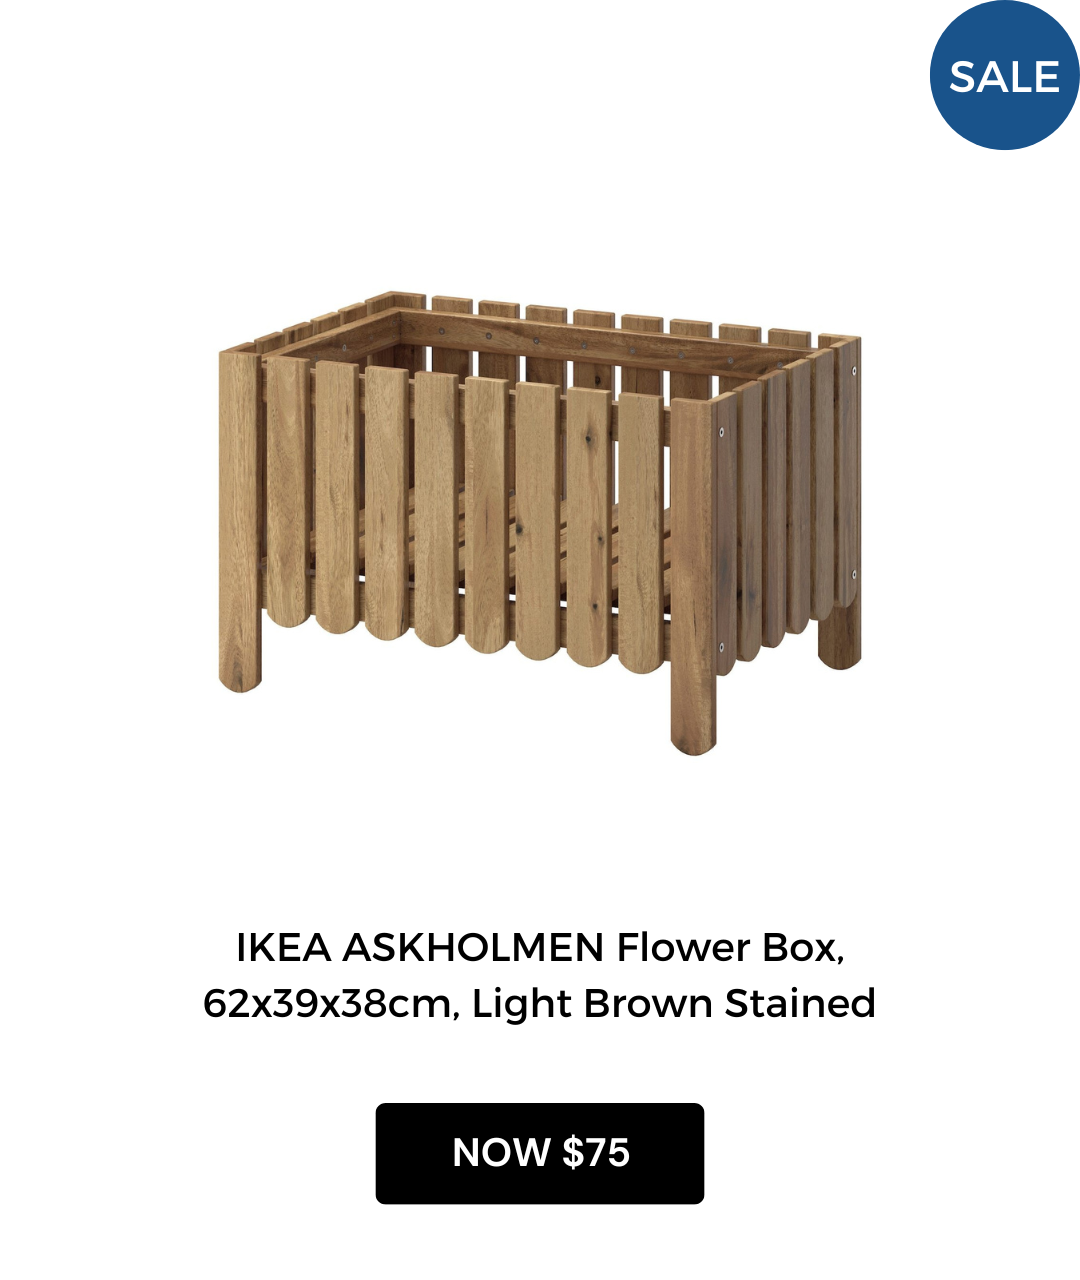 IKEA ASKHOLMEN Flower Box, 62x39x38cm, Light Brown Stained